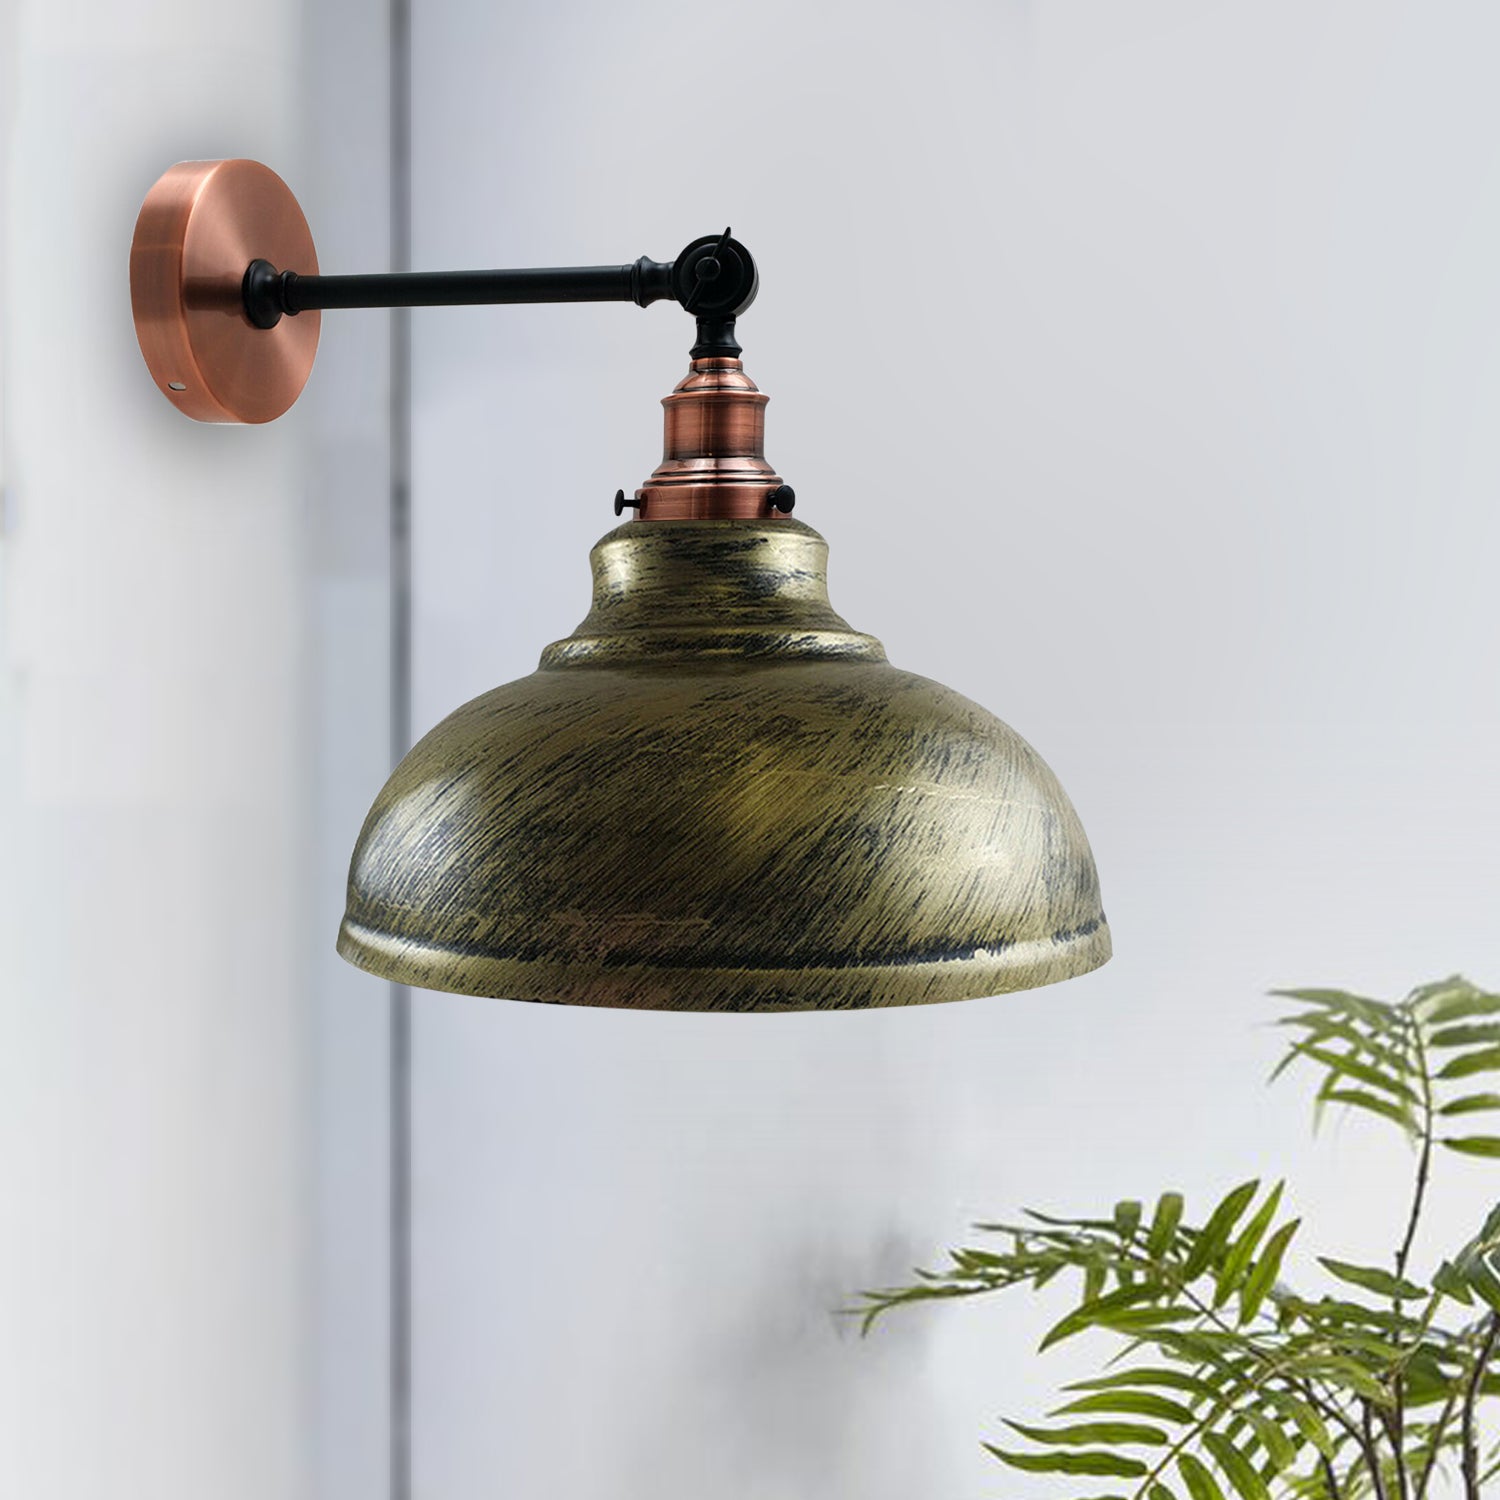 Brushed Brass Metal Curvy Brushed Industrial Wall Mounted Wall Lamp Light~3458 - LEDSone UK Ltd